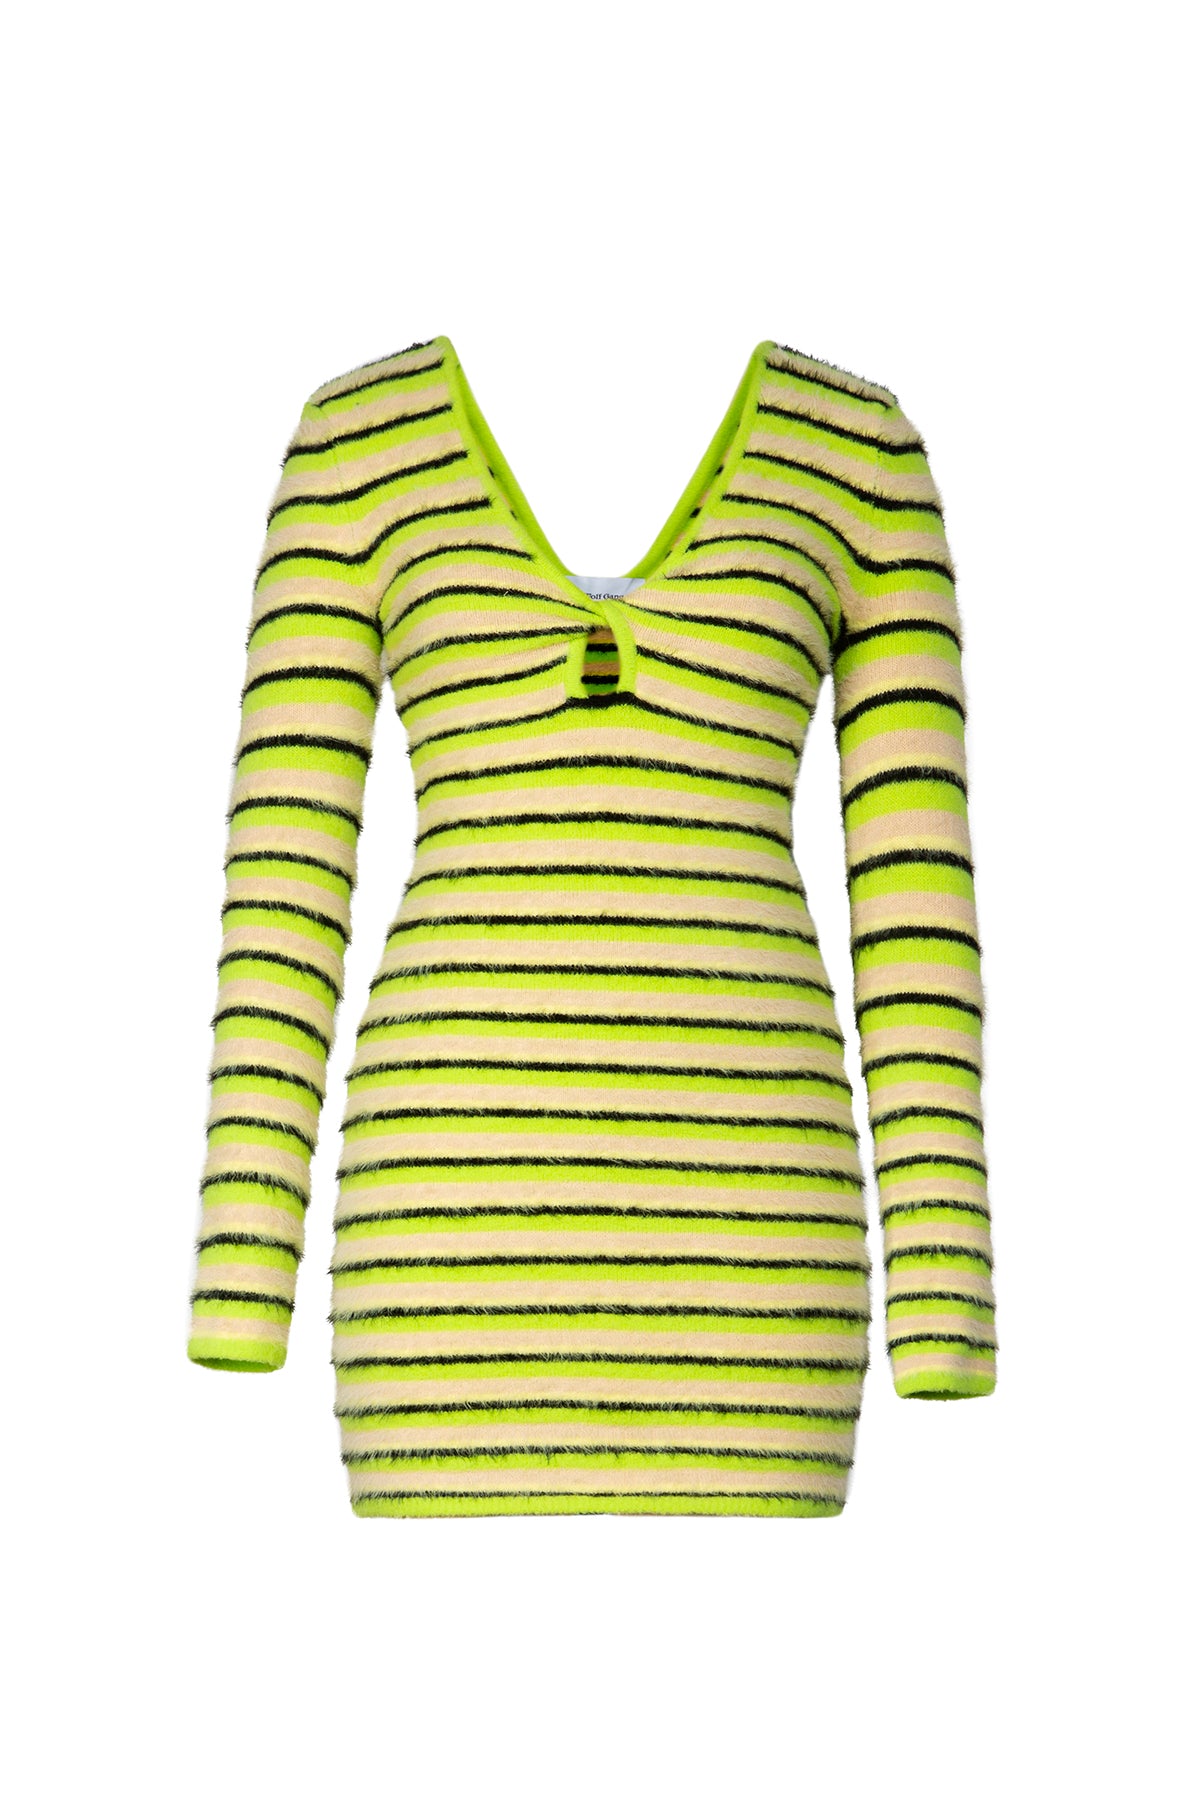 Estie Knit Dress - Lime Stripe